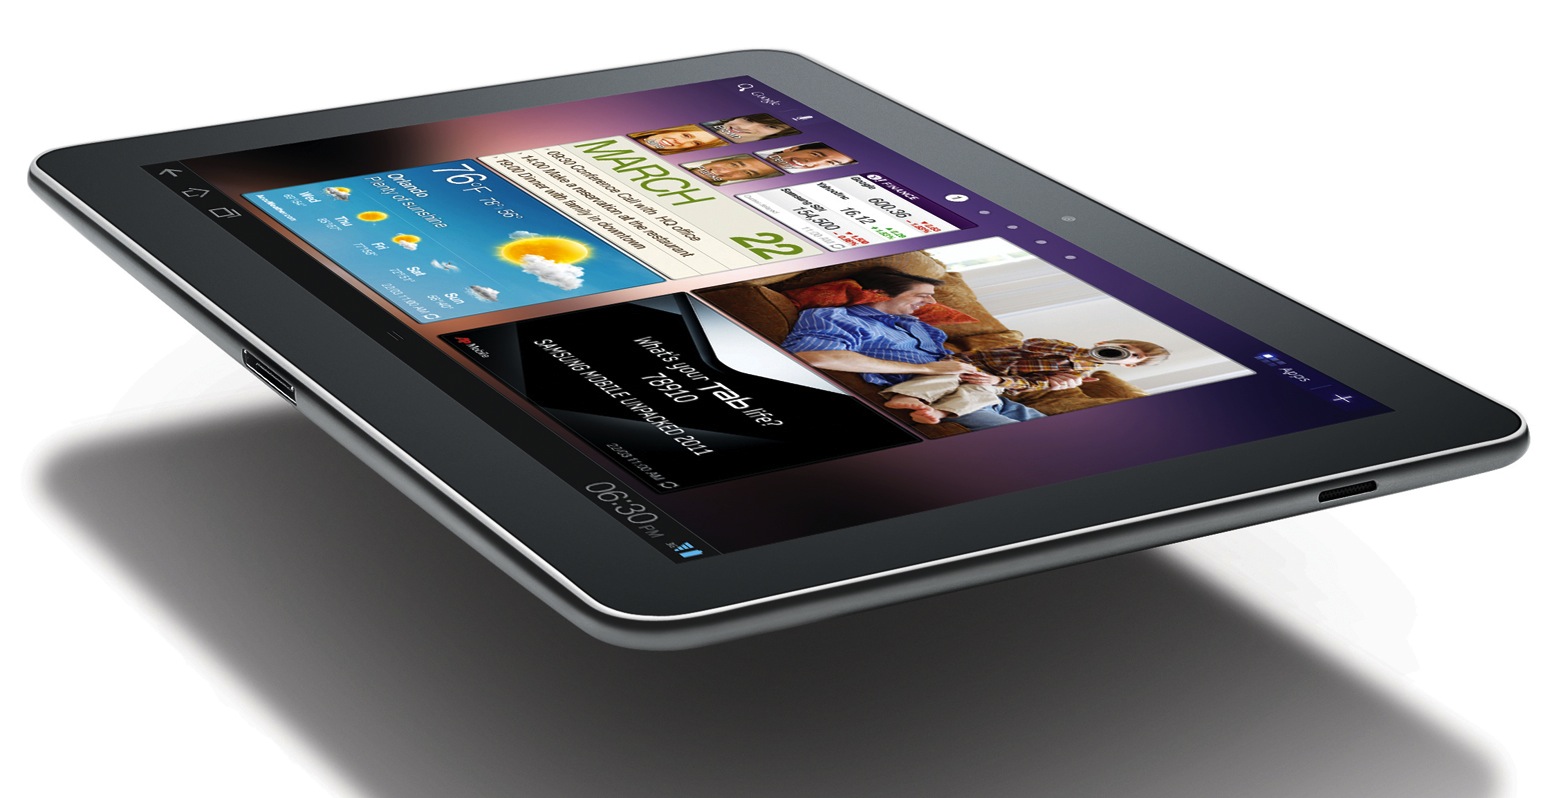 Продажа Galaxy Tab 10.1 в США вновь приостановлена